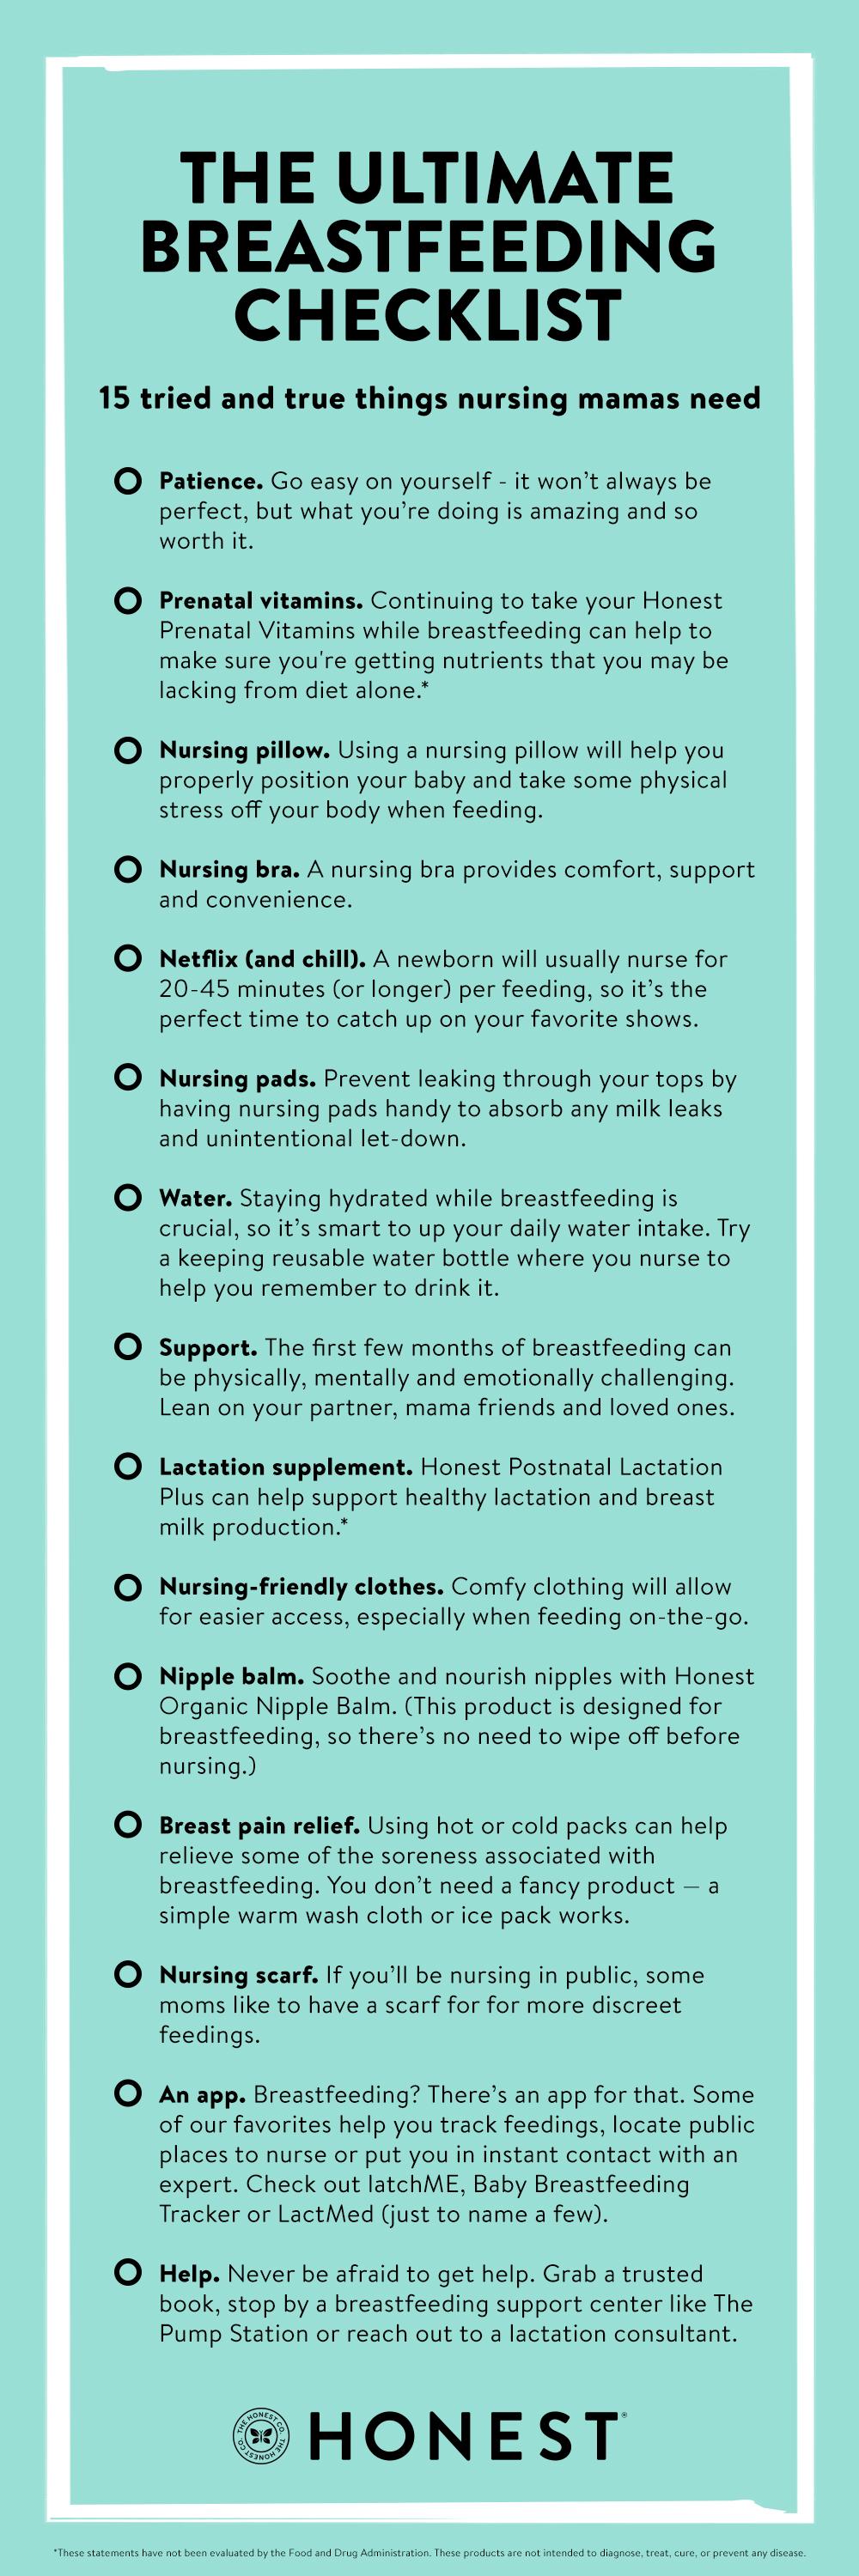 Breastfeeding Must Haves + Breastfeeding Essentials Checklist - Must Have  Mom